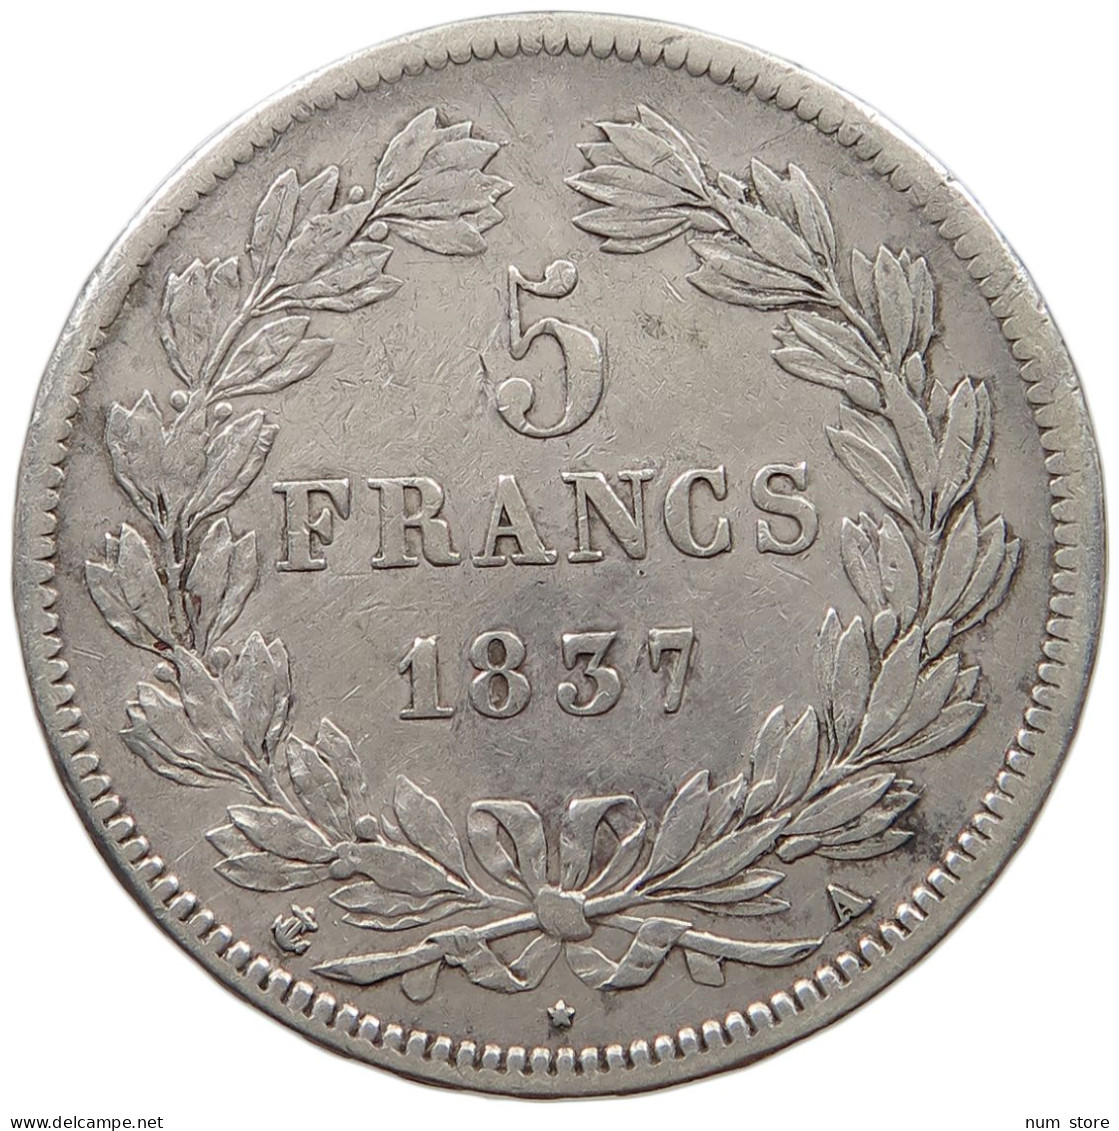 FRANCE 5 FRANCS 1837 A LOUIS PHILIPPE I. (1830-1848) #c058 0085 - 5 Francs